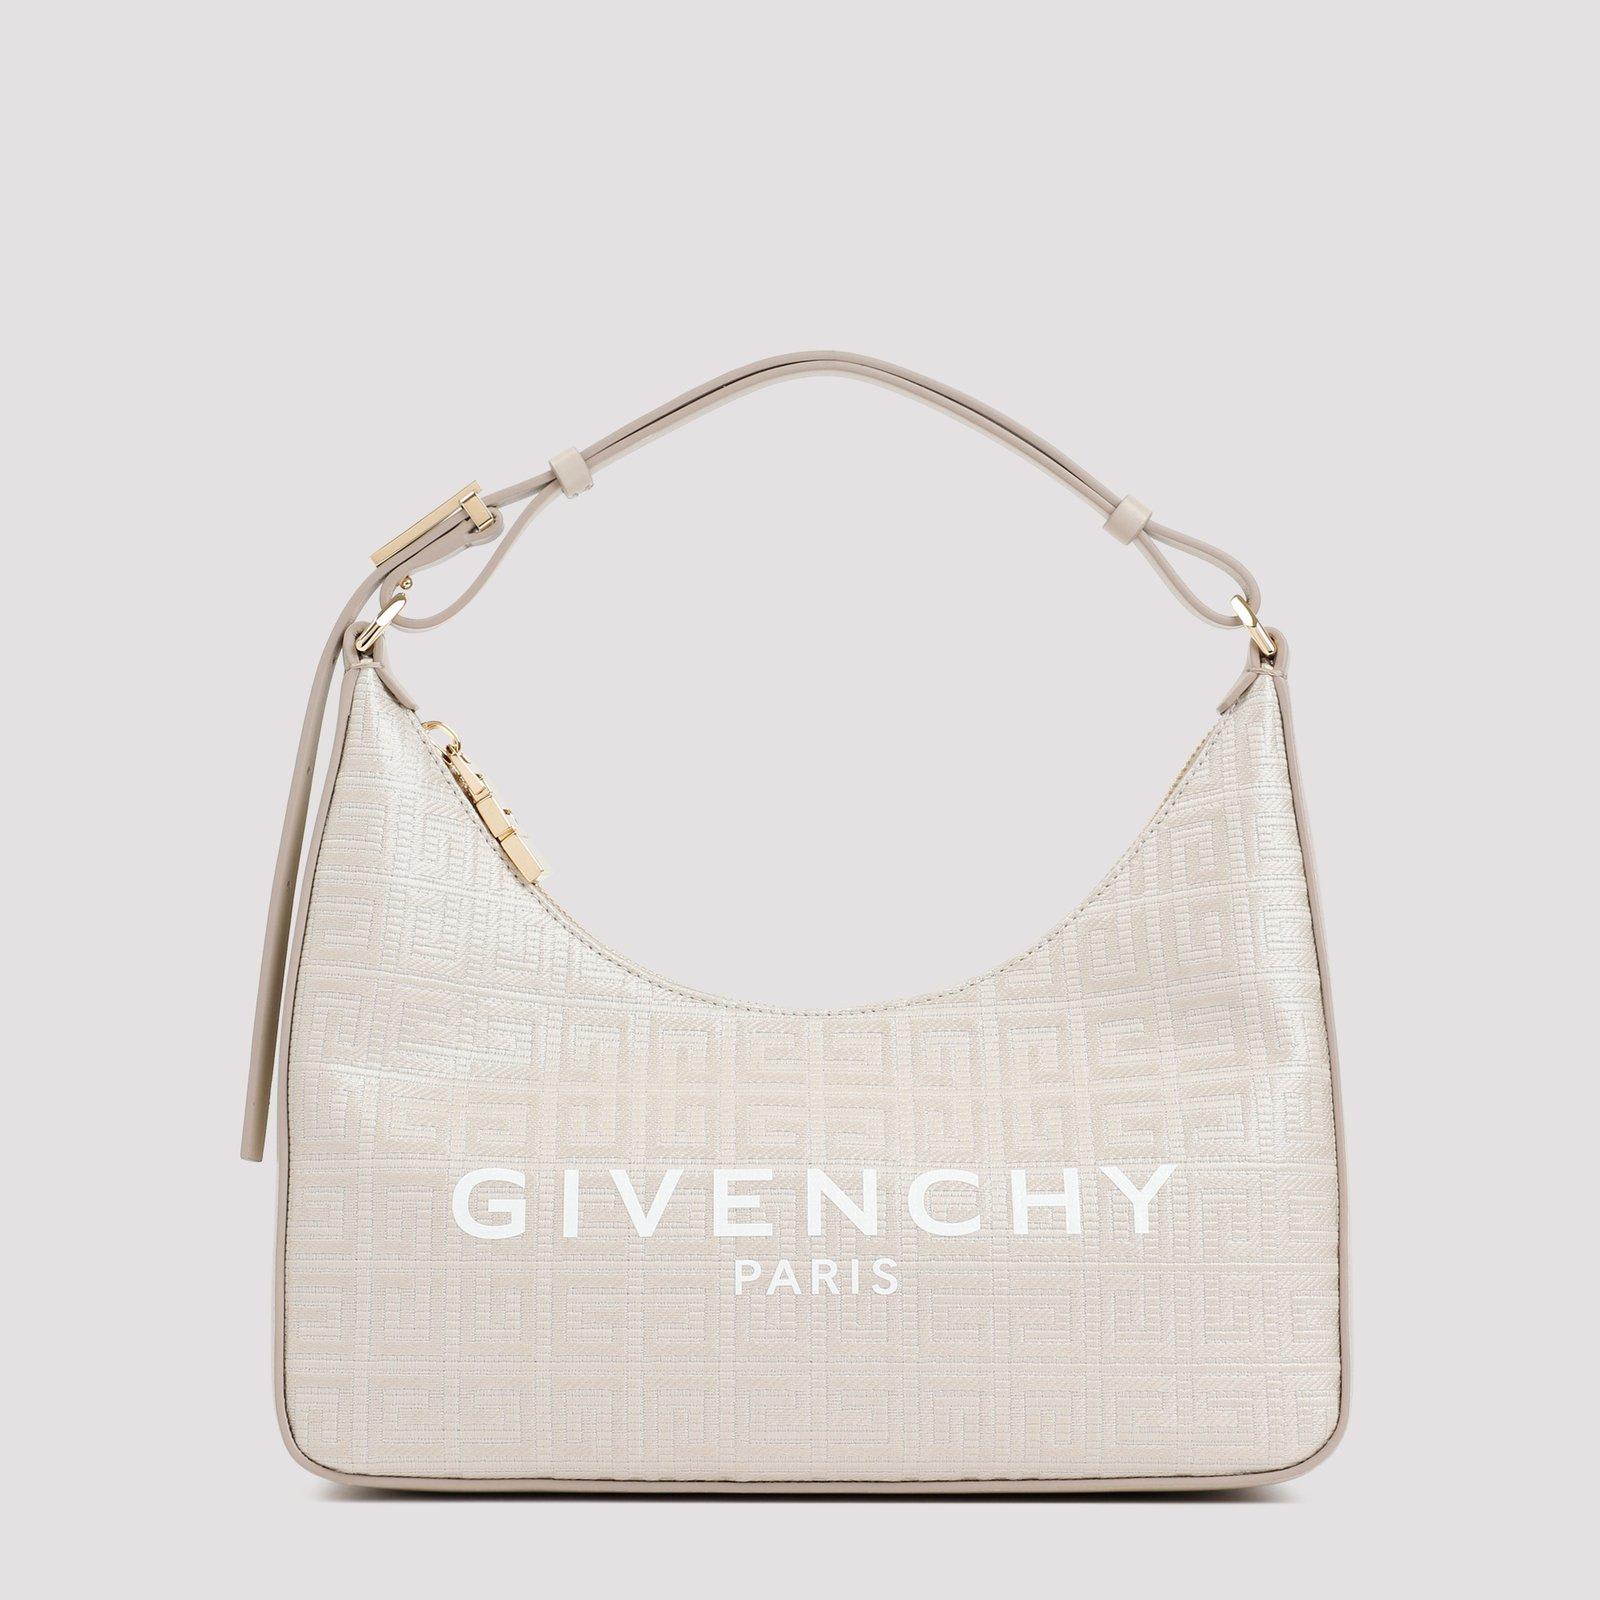 Givenchy Moon Cut Out Small Shoulder Bag